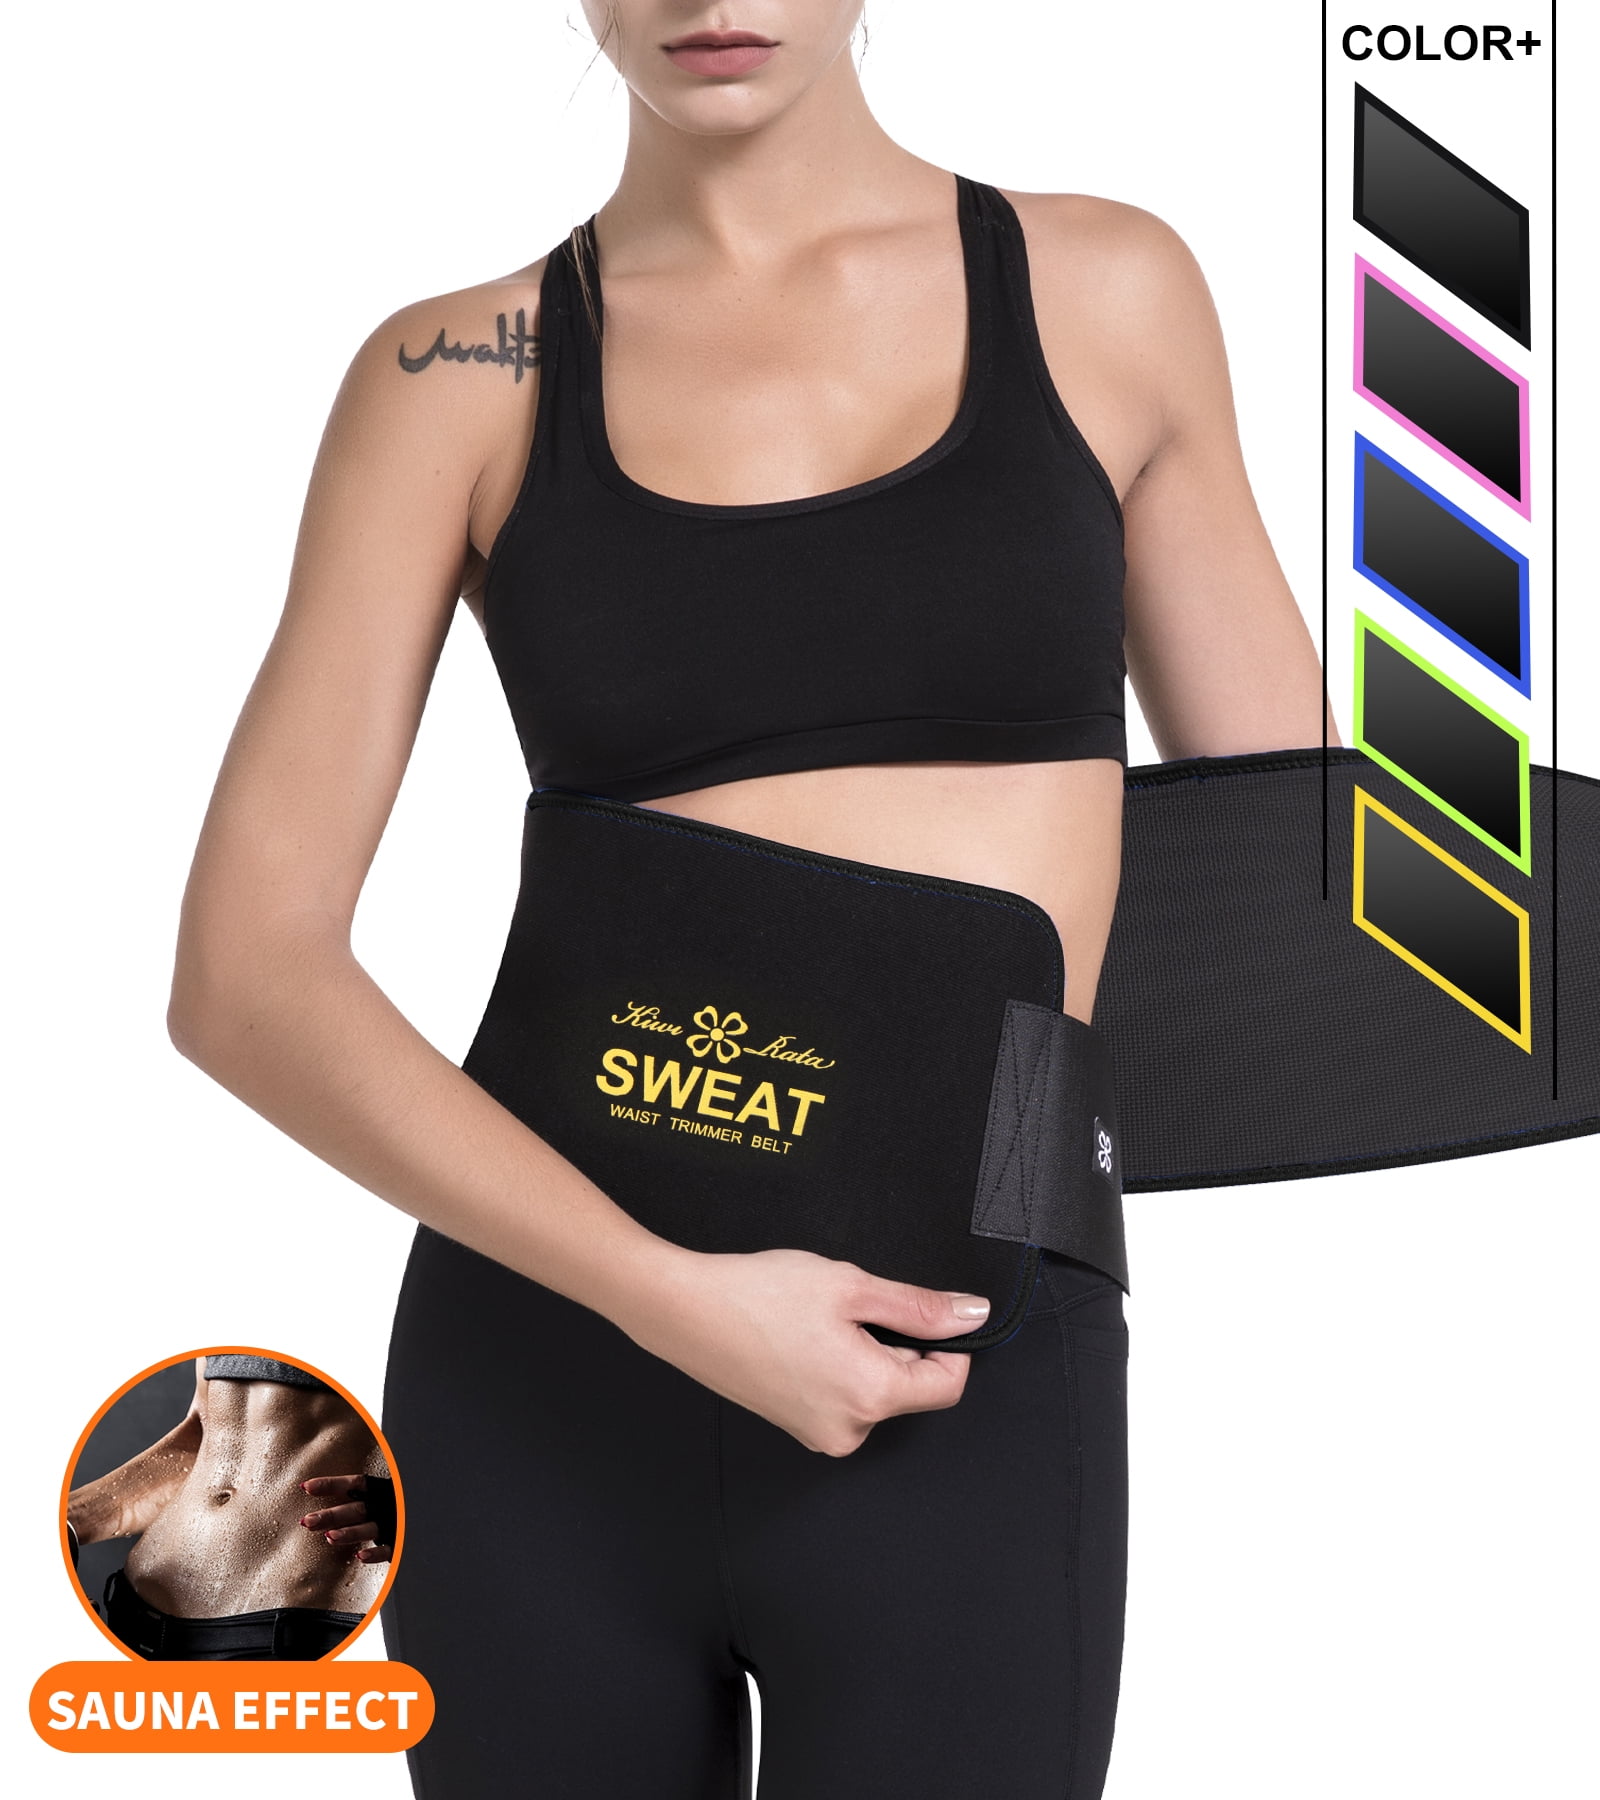 Waist Trimmer Weight Loss Belt Sauna Sweat Waist Trainer Workout Sweat Enhancer Exercise Adjustable Tummy Control Wraps 